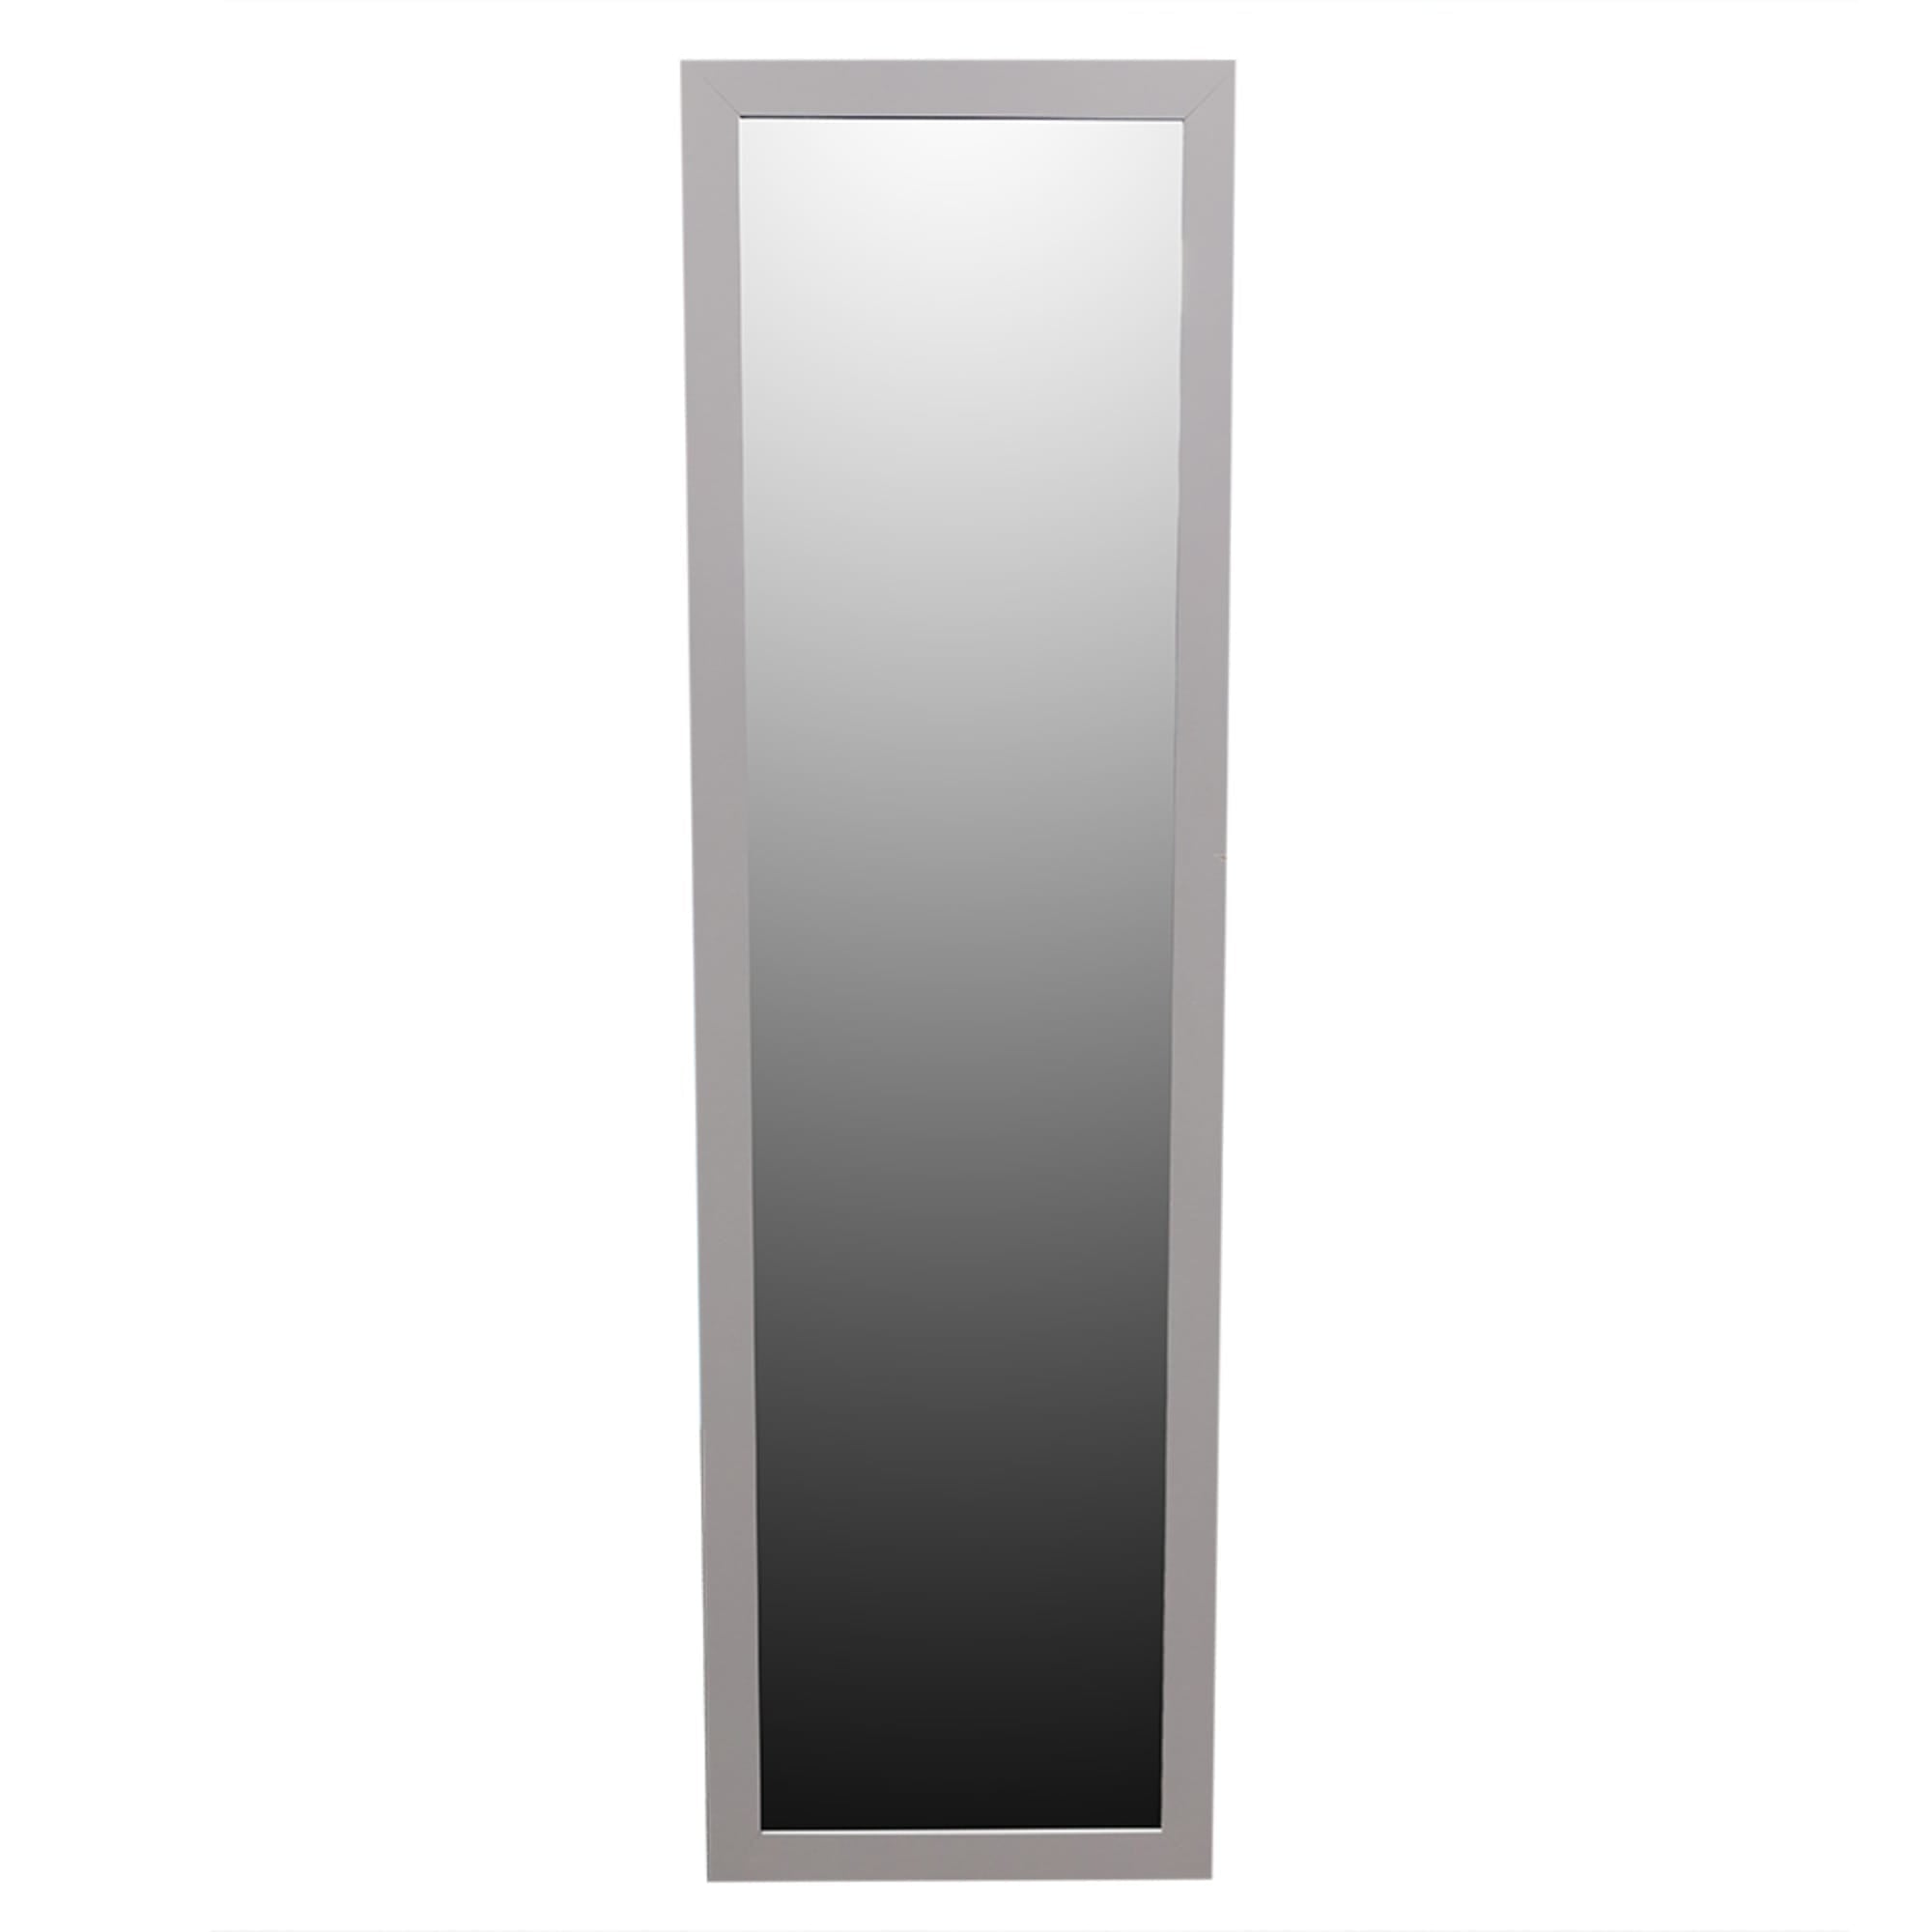 Home Basics Easel Back Full Length Mirror with MDF Frame, Grey $15.00 EACH, CASE PACK OF 6